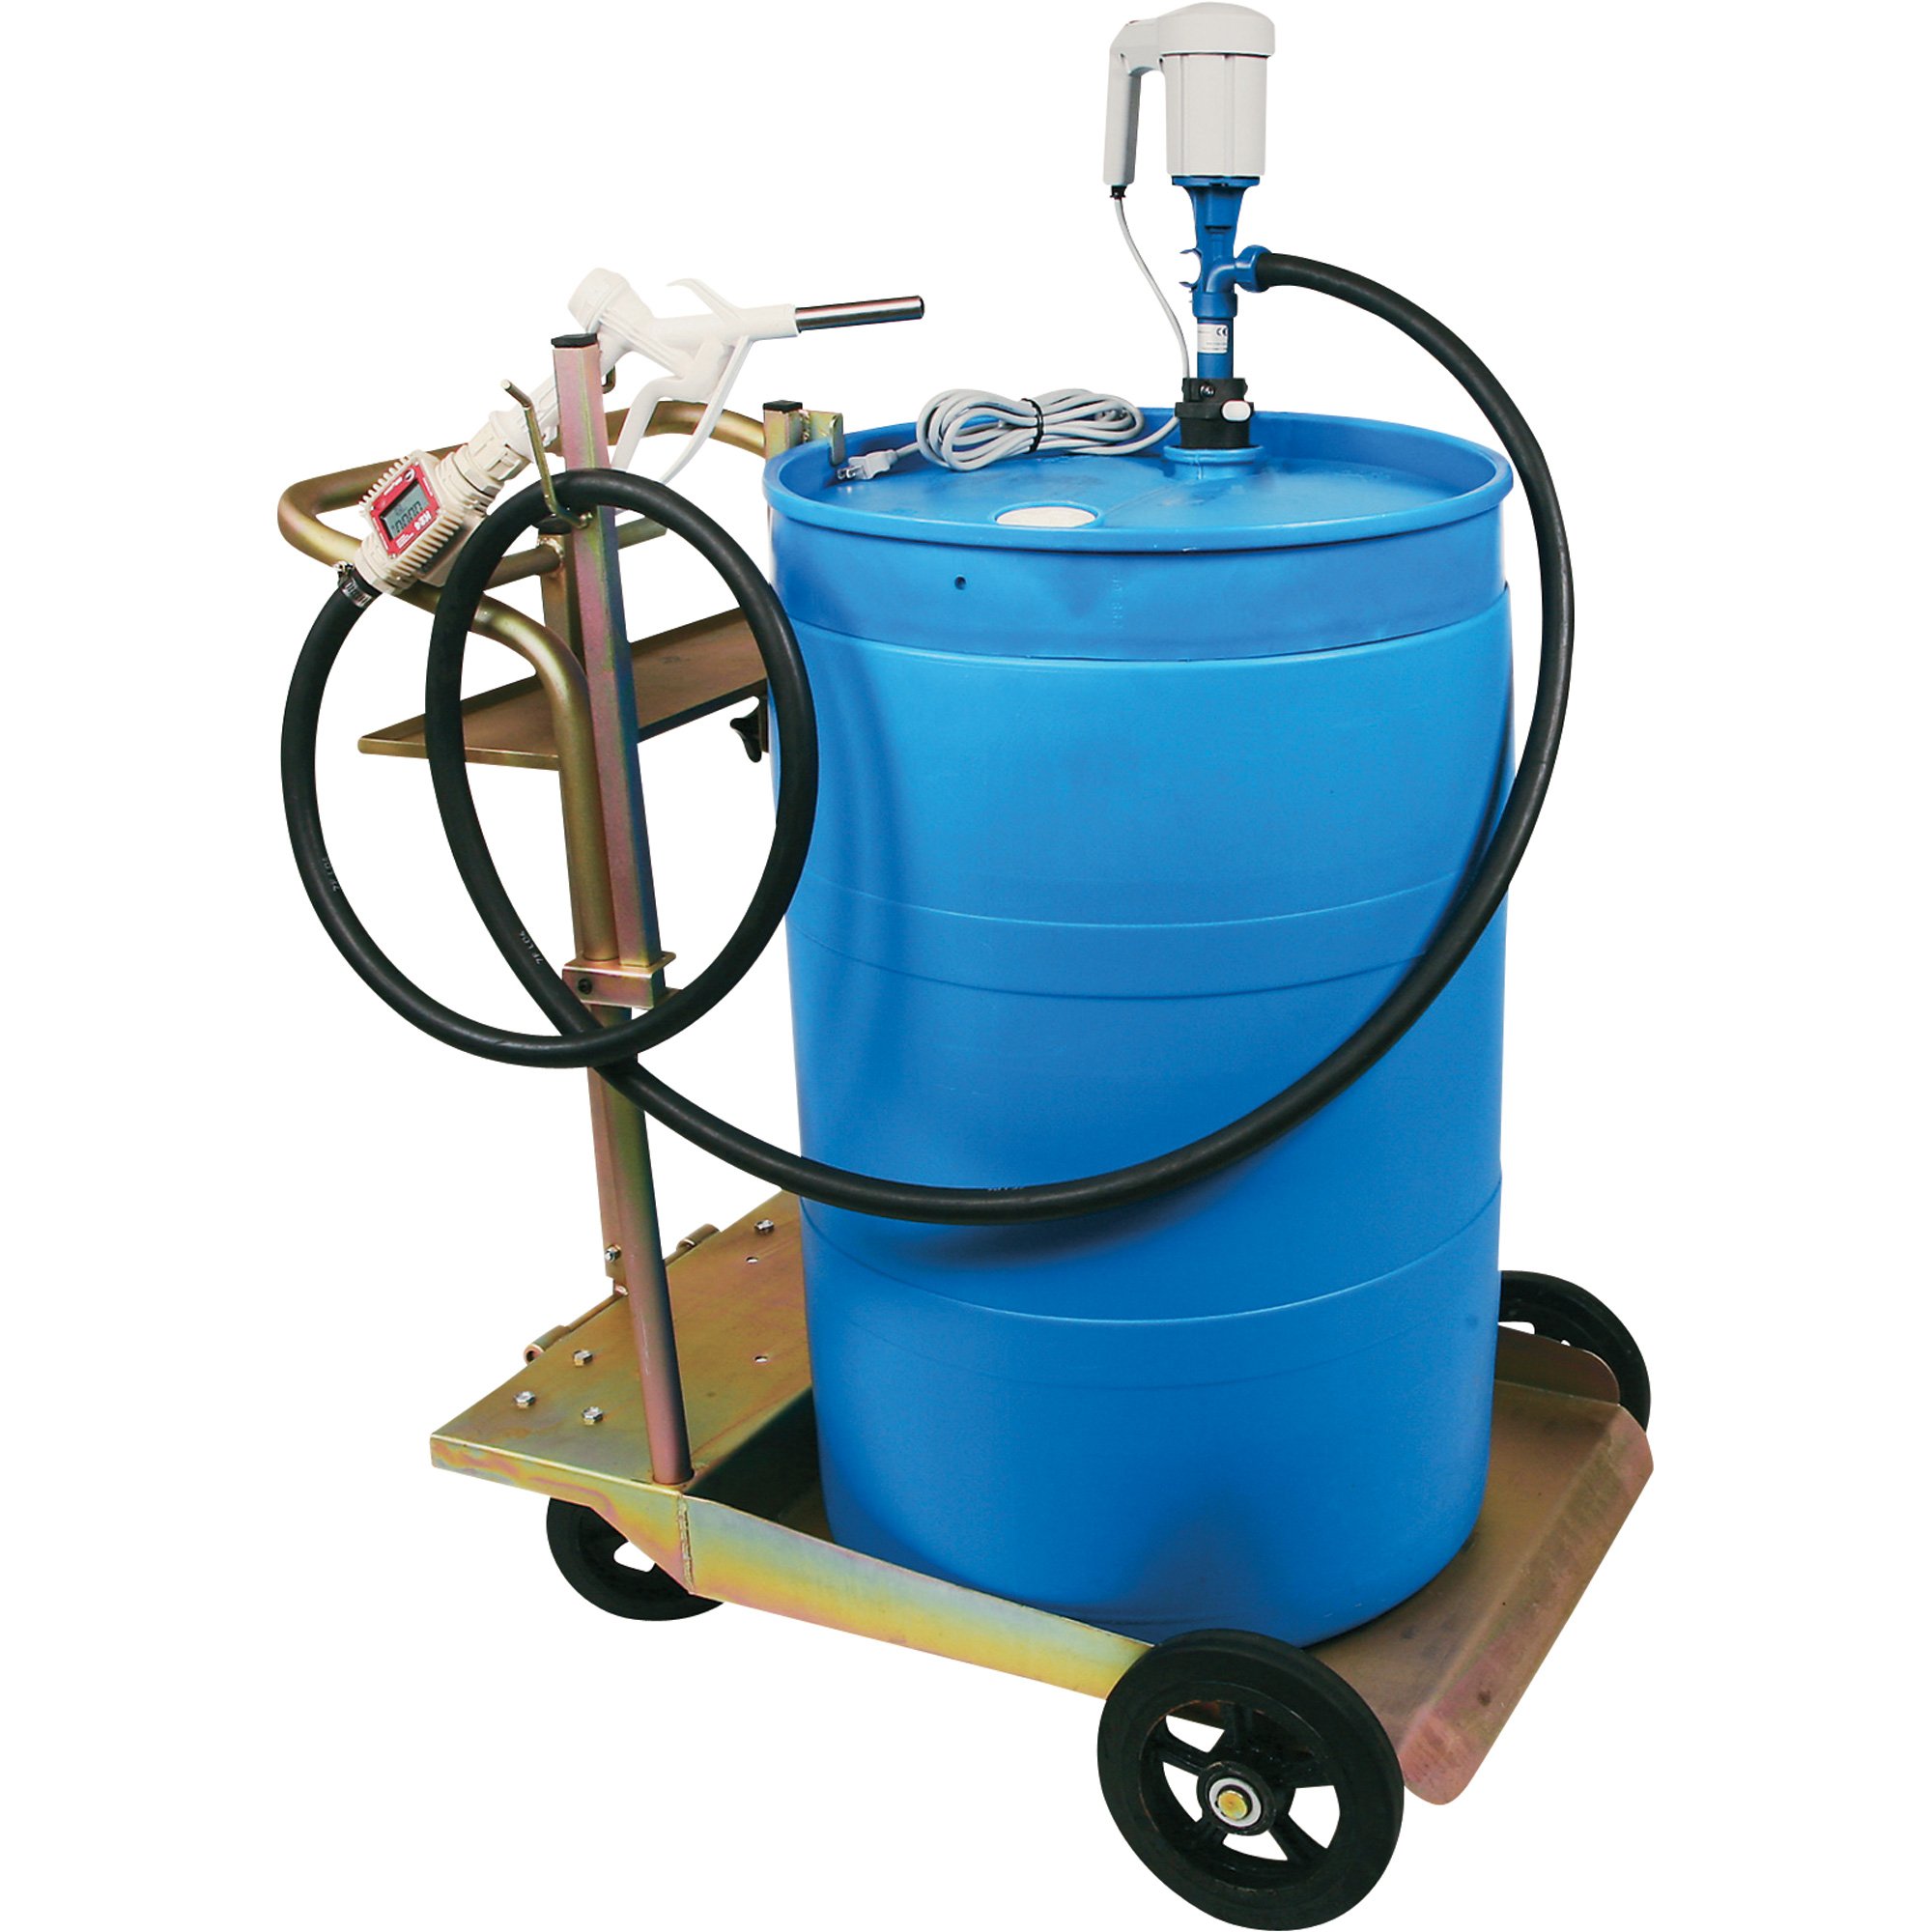 LiquiDynamics Pump Transfer System for Diesel Exhaust Fluid (DEF